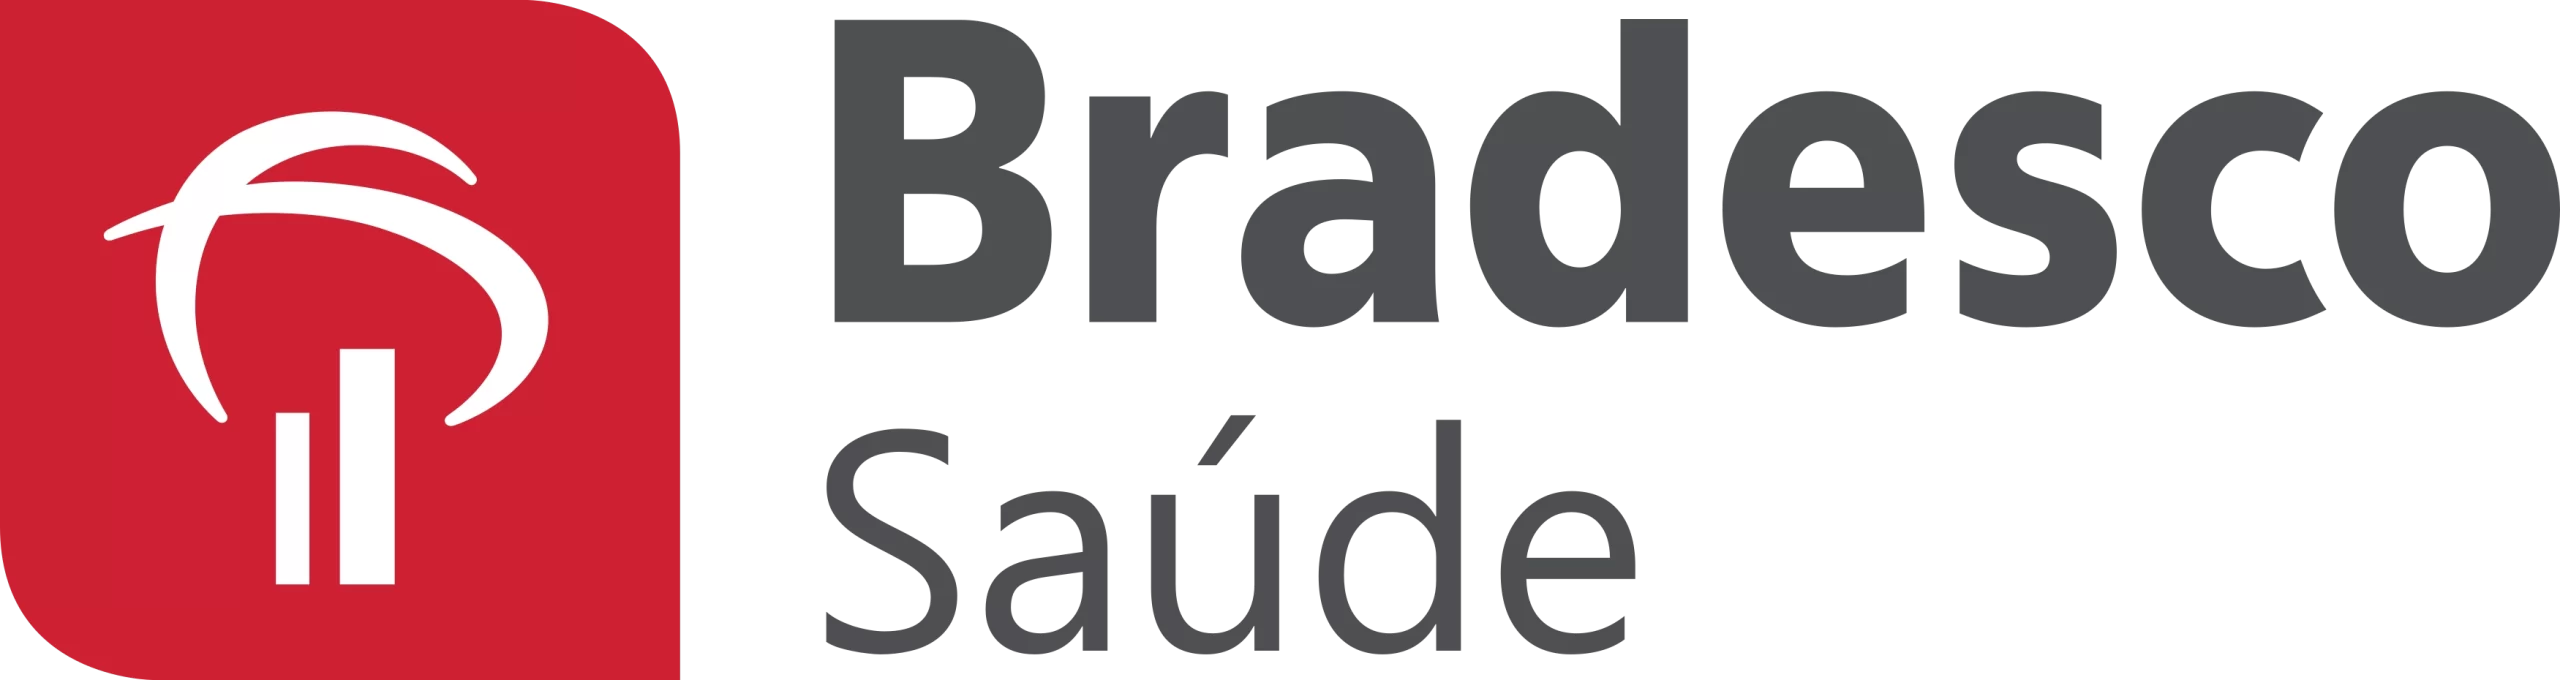 bradesco-saude-logo copy